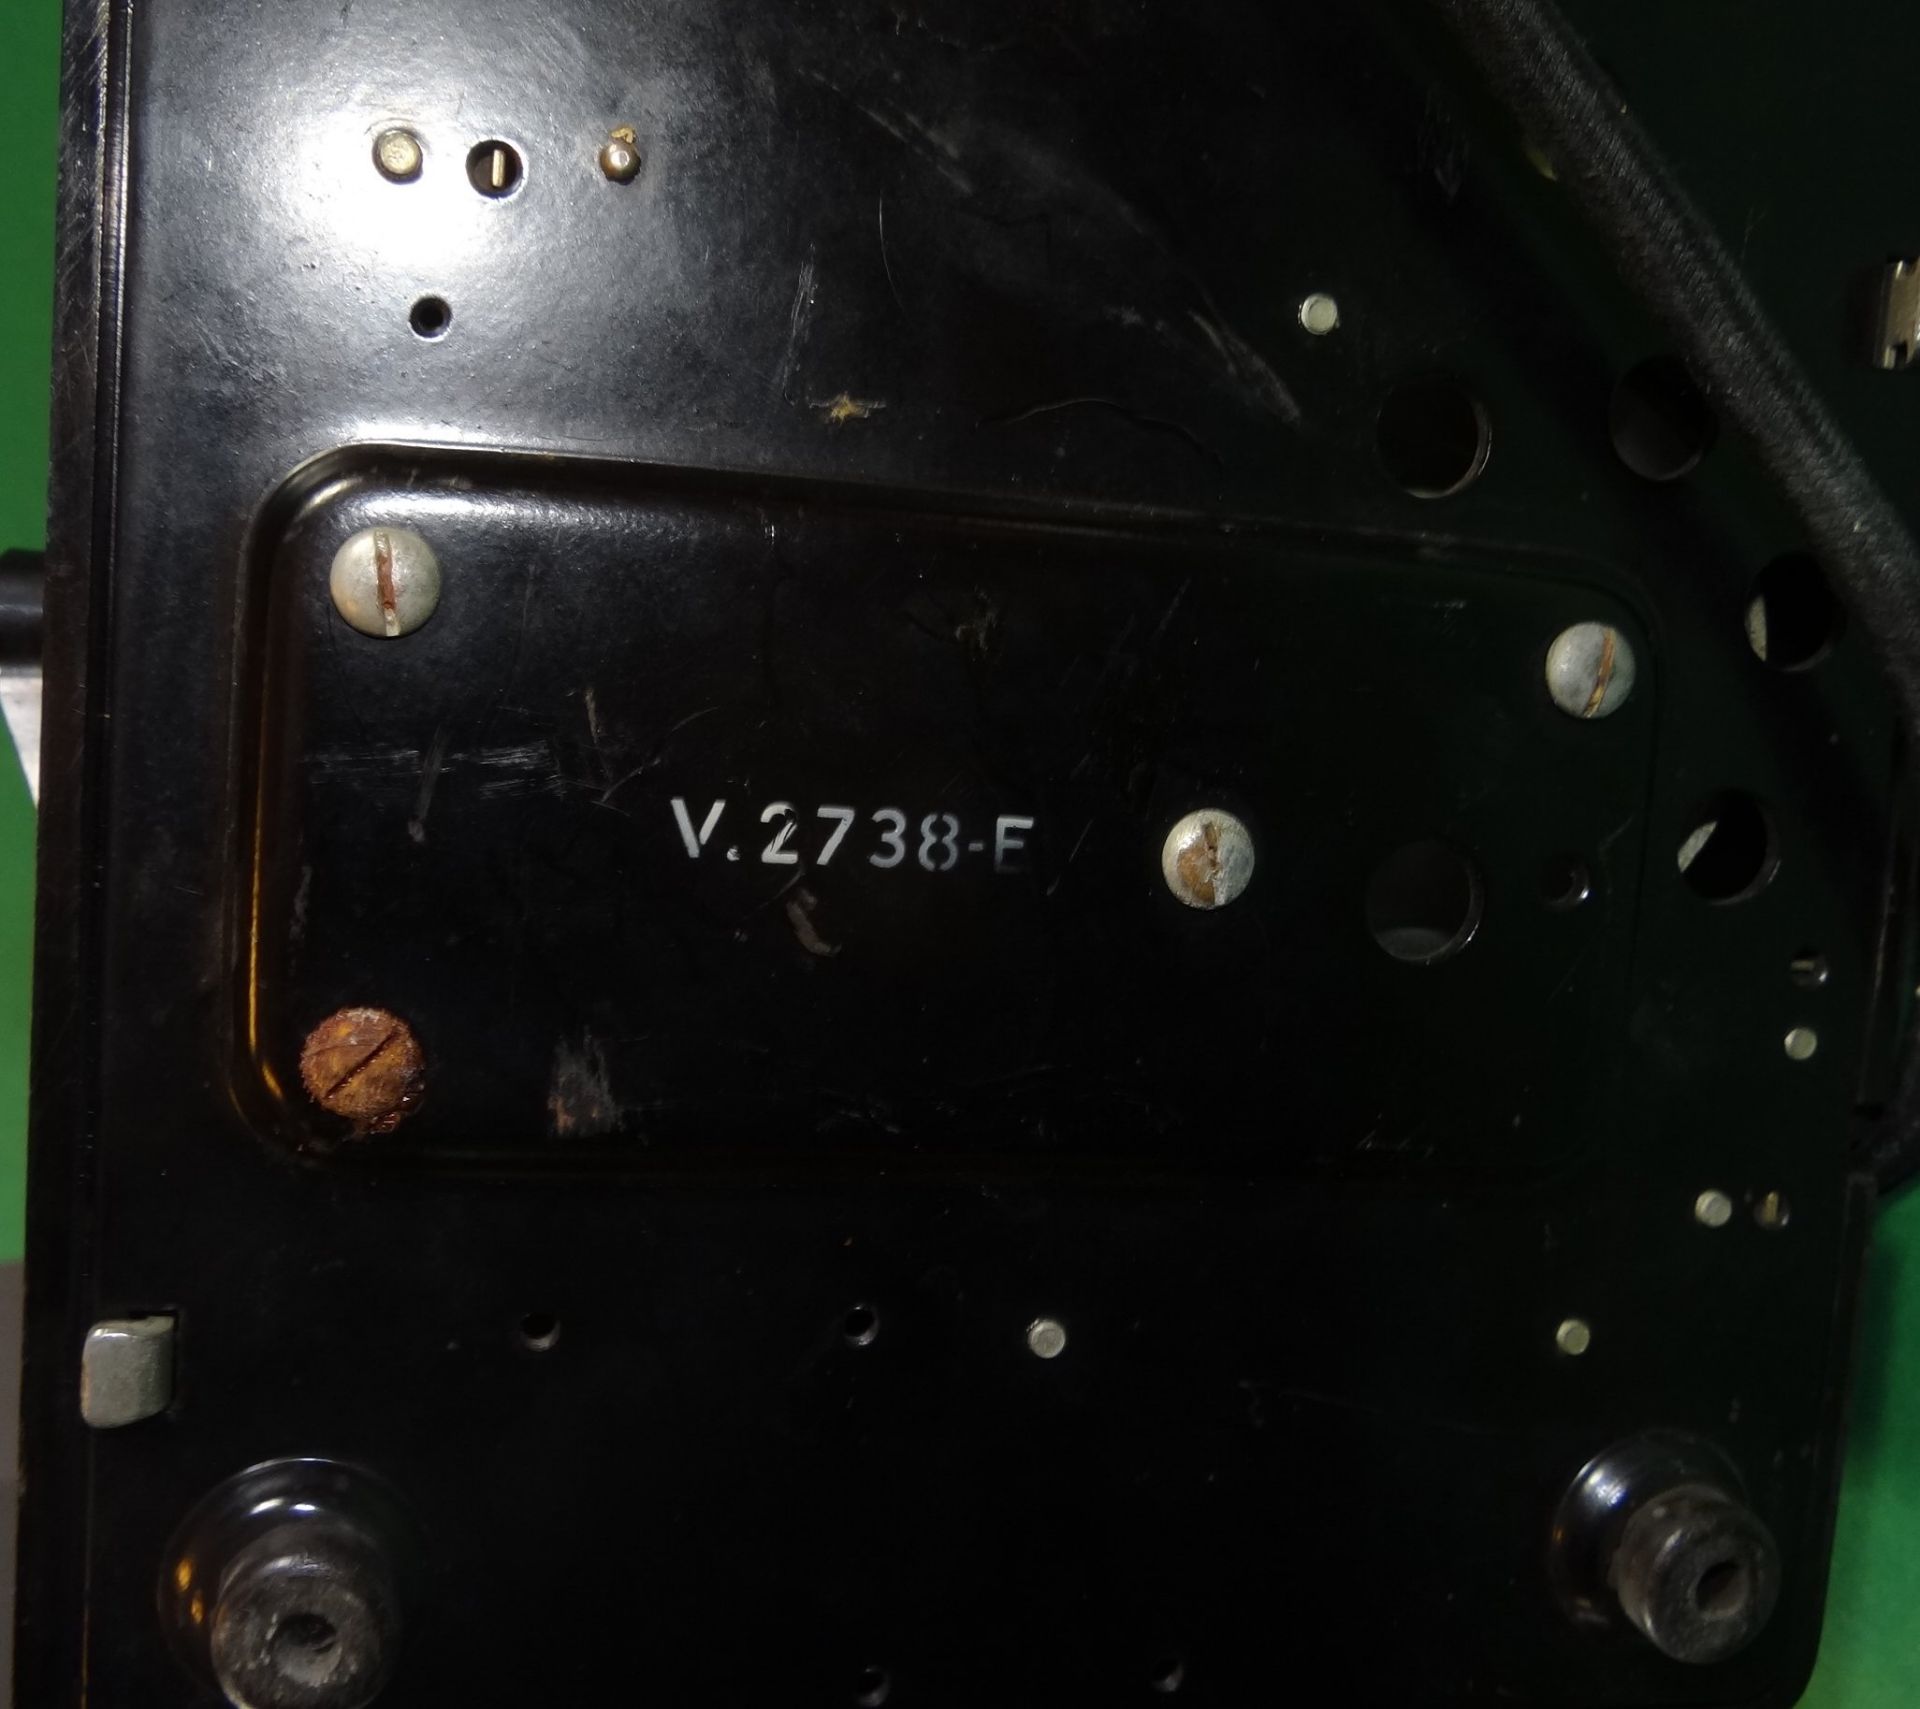 Kurbeltelefon V2738-F in Bakelitgehäuse, wohl funktionstüchtig, guter Zustand - Bild 6 aus 6